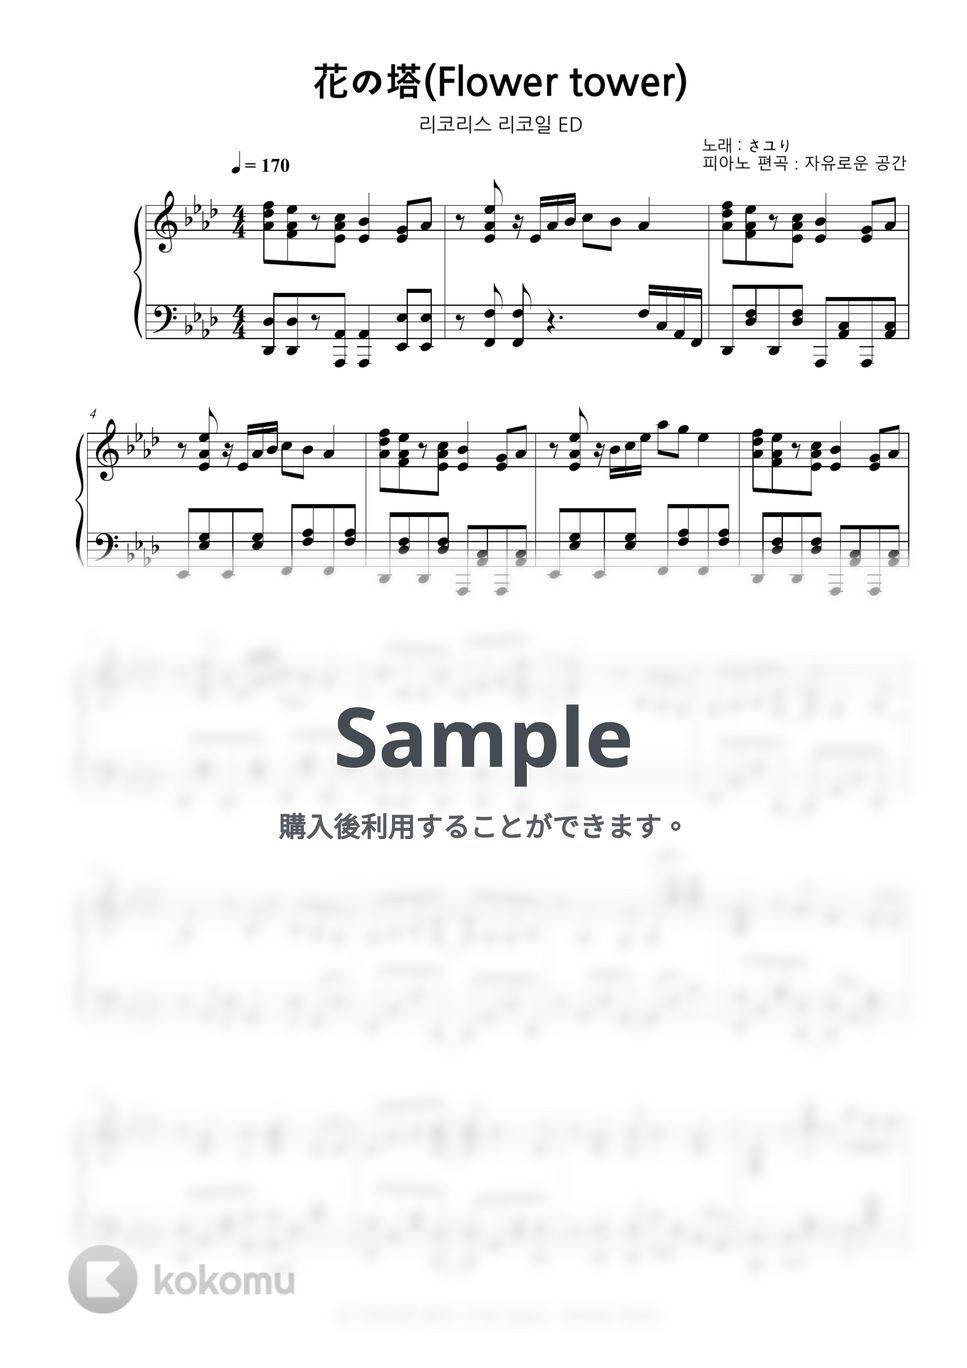 Sayuri - 花の塔 (リコリス・リコイル OST) by Free Space / Anime Piano Covers